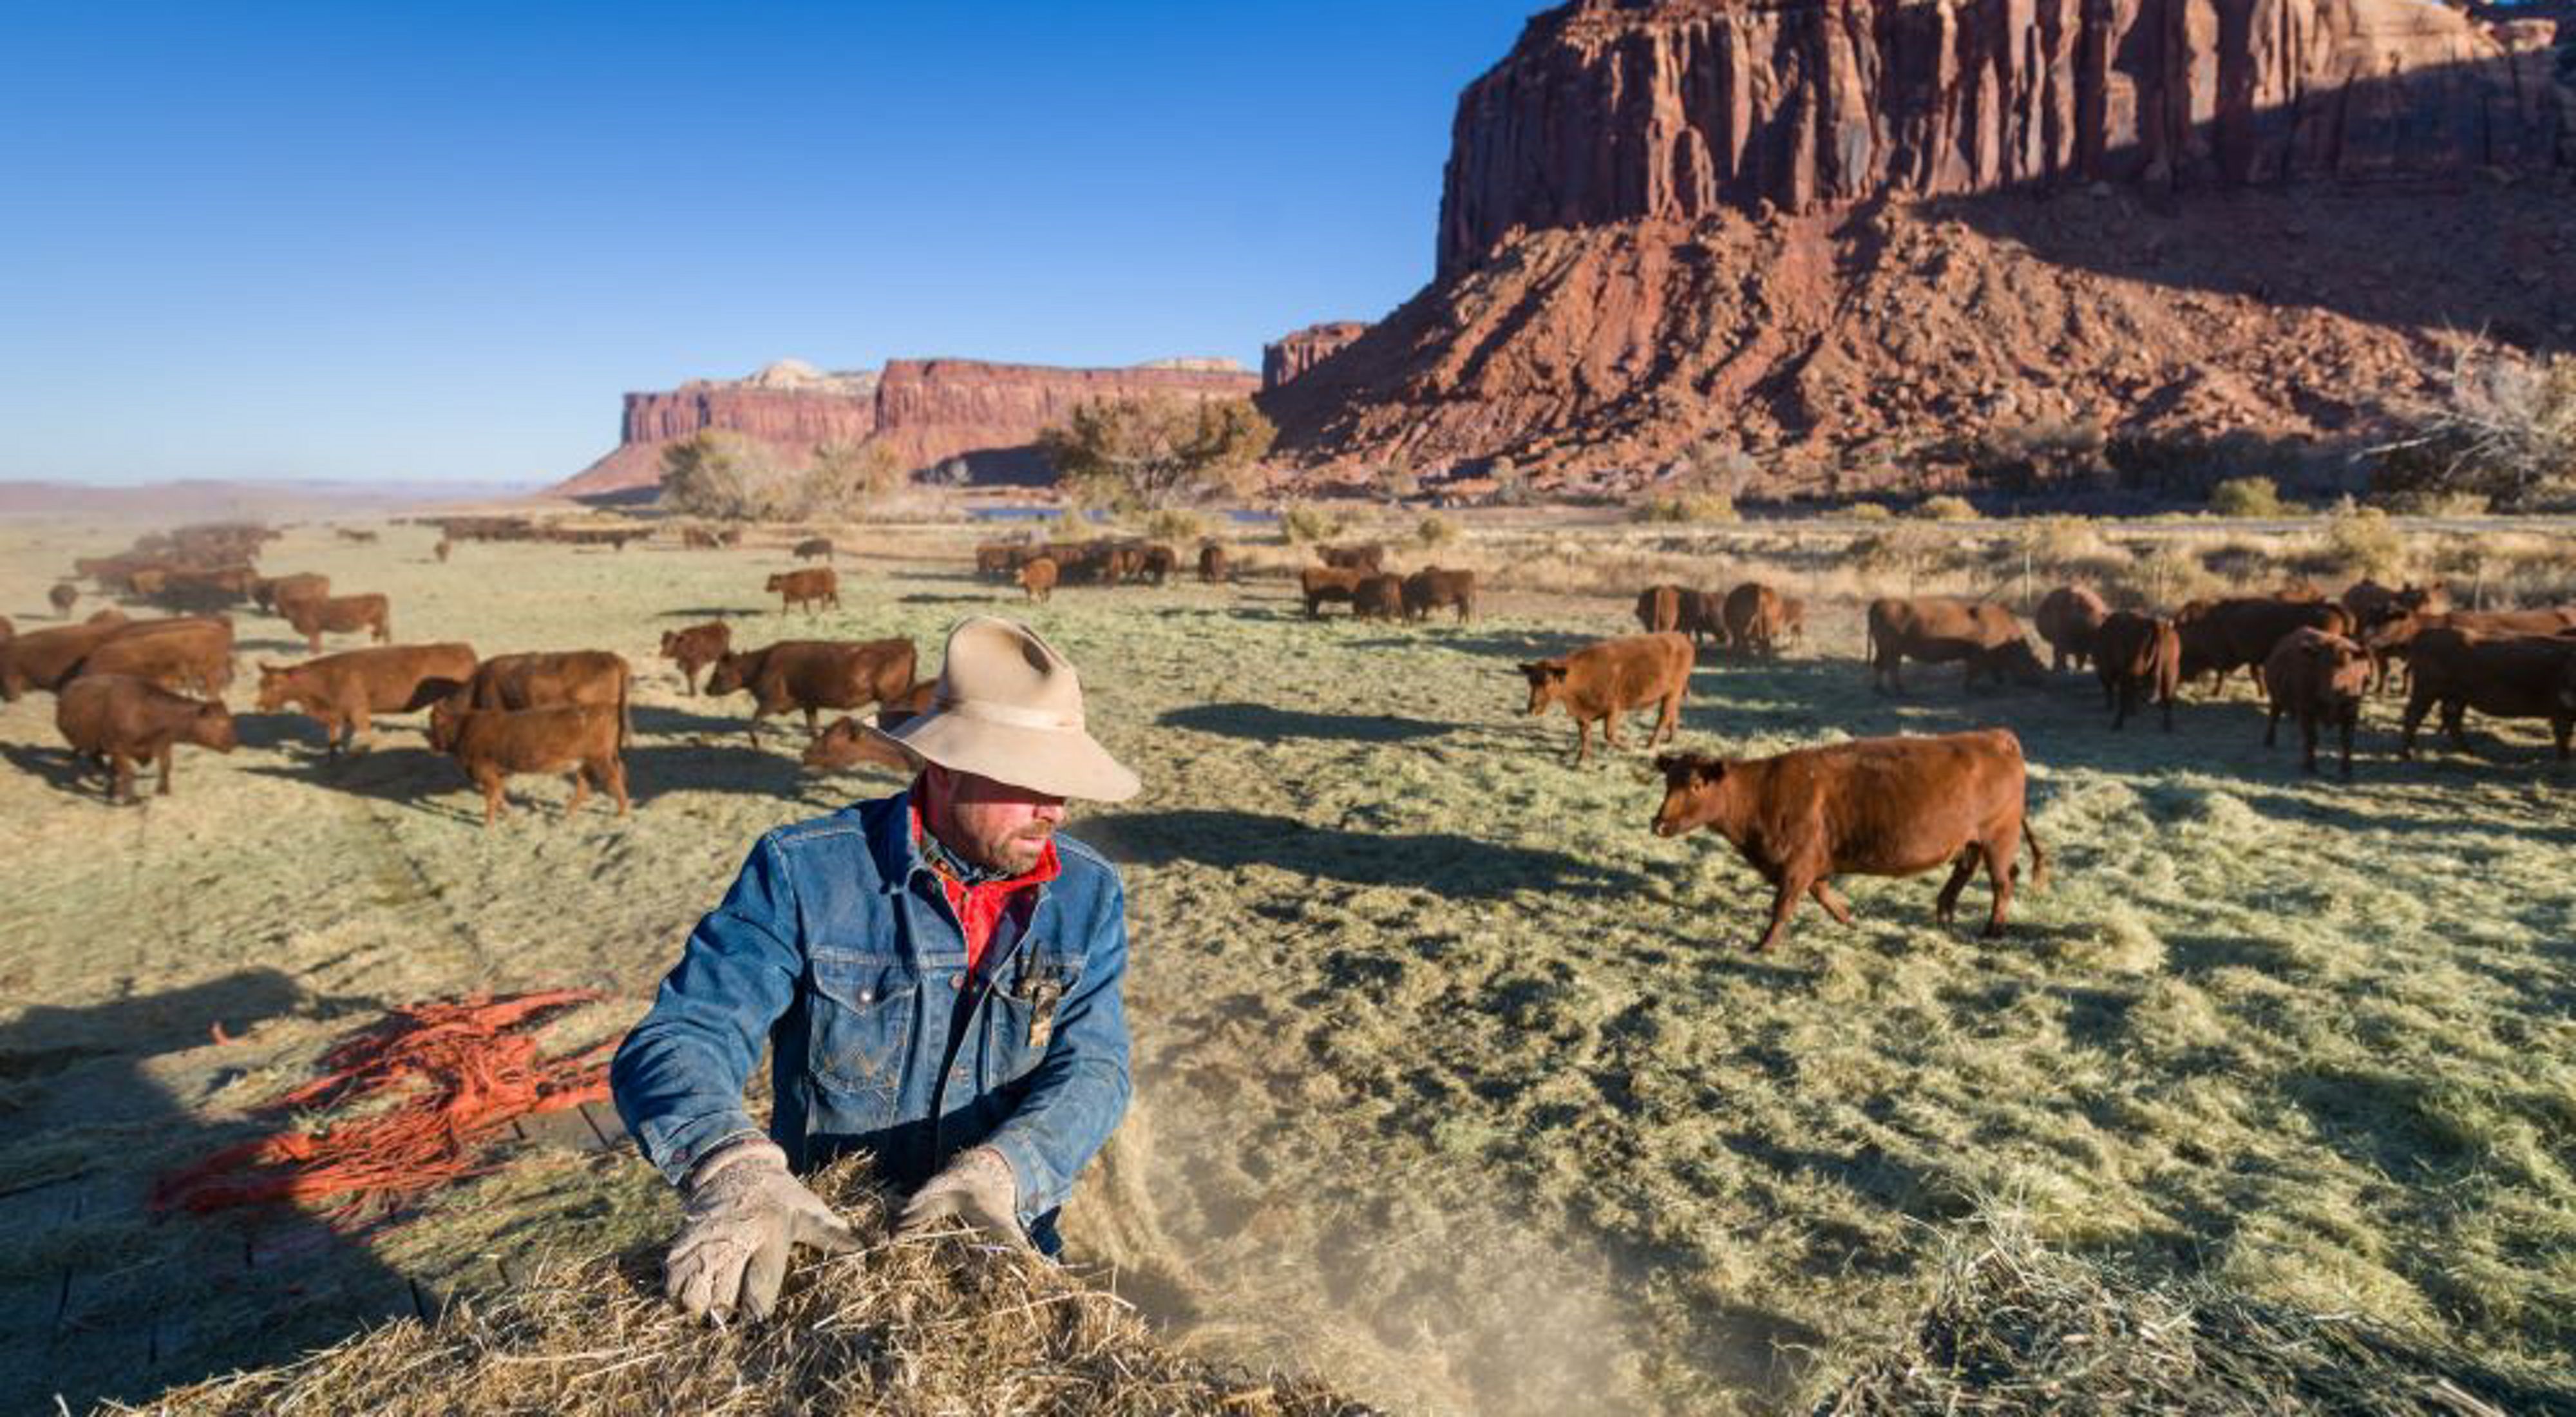 A man works near cattle.